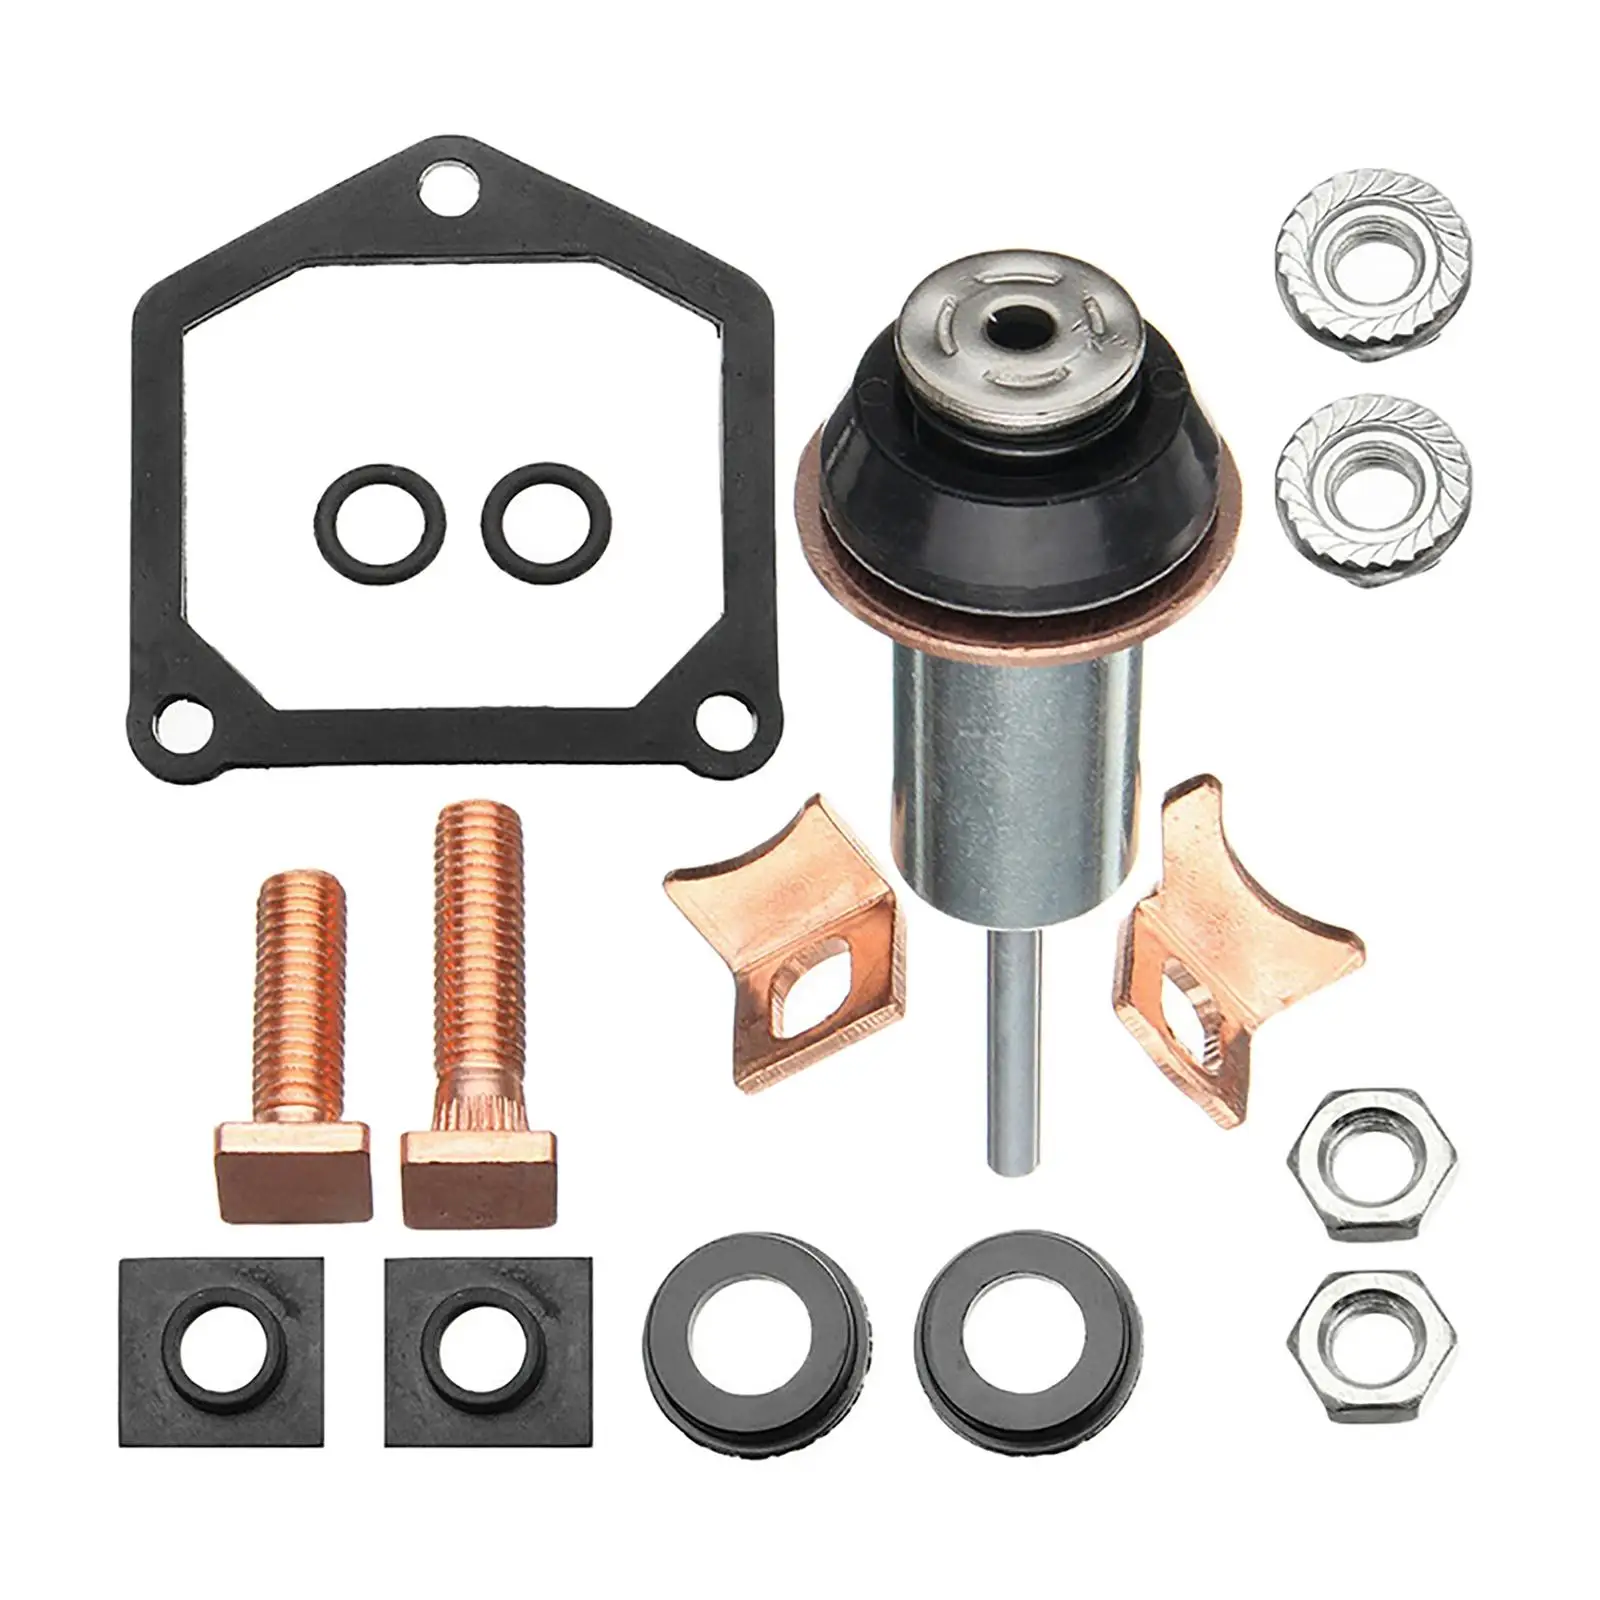 Automobile Starter Solenoid Repair Kit 228000-6660 28100-07010 228000-3750 for   , Premium High Performance